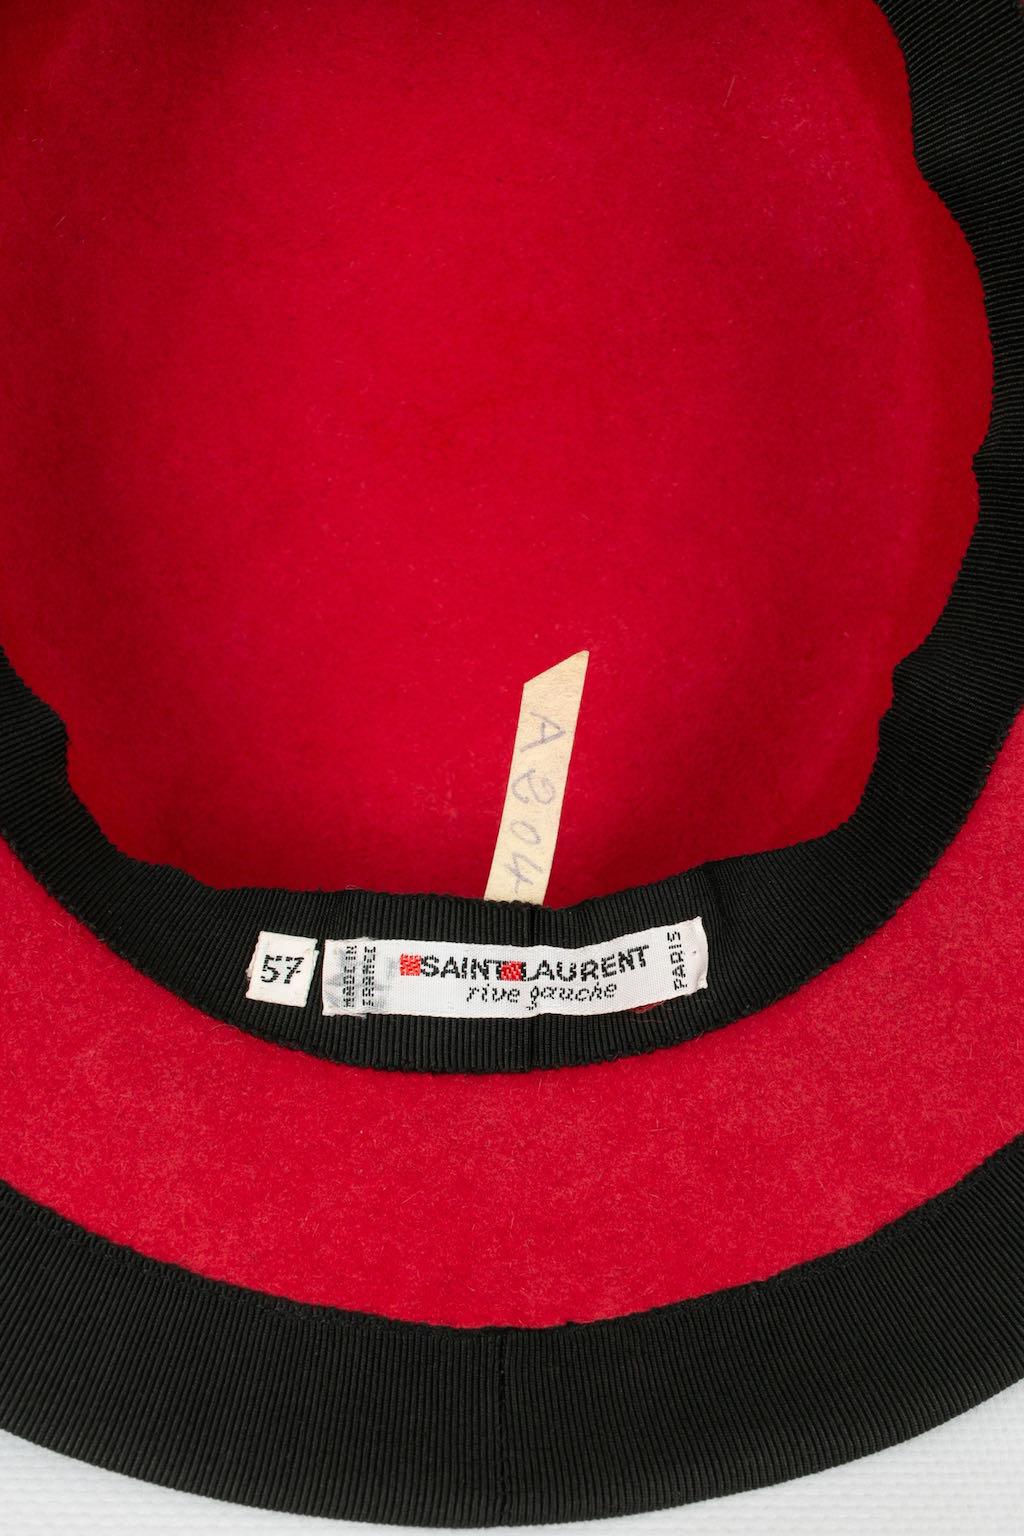 Yves Saint Laurent Red and Black Catwalk Hat 6